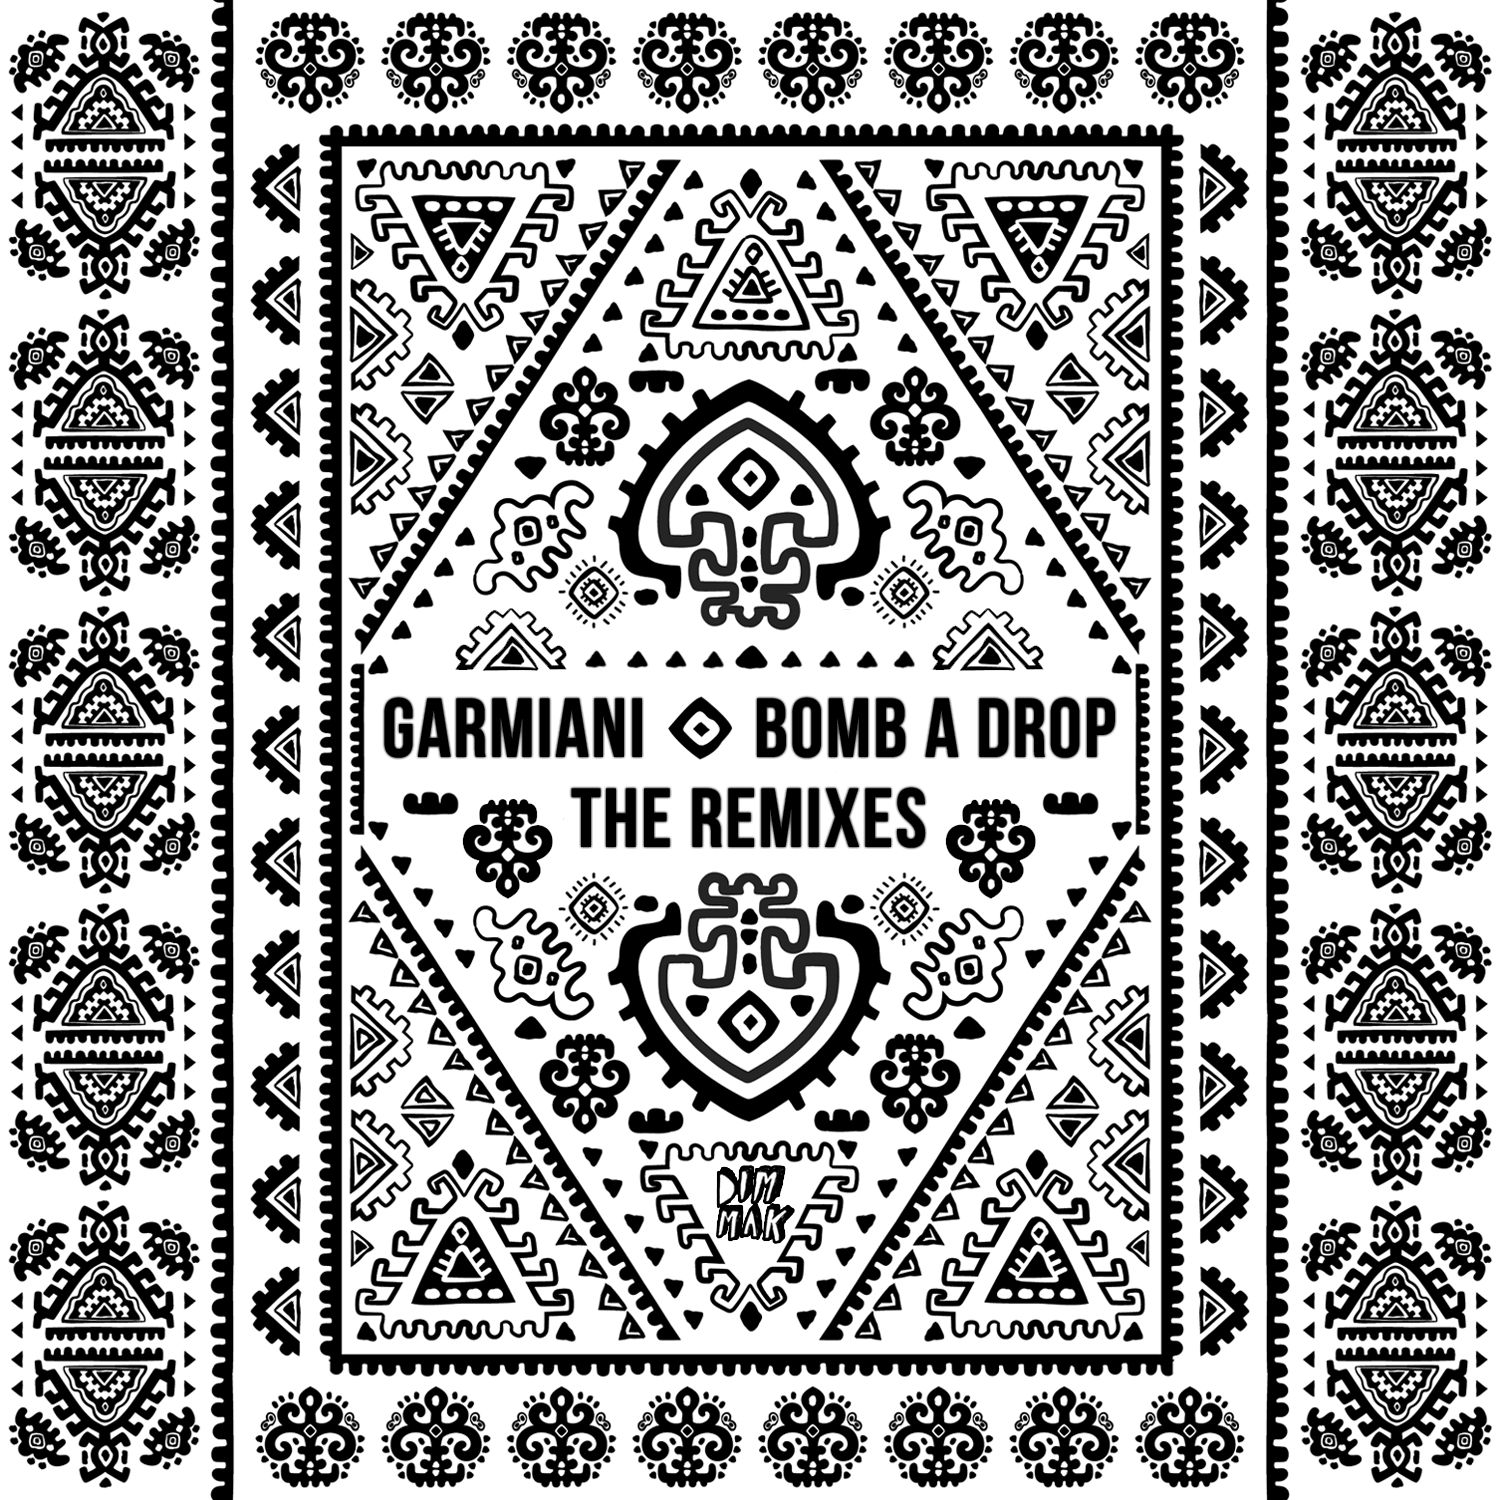 Bomb A Drop (Sunday Service Remix)